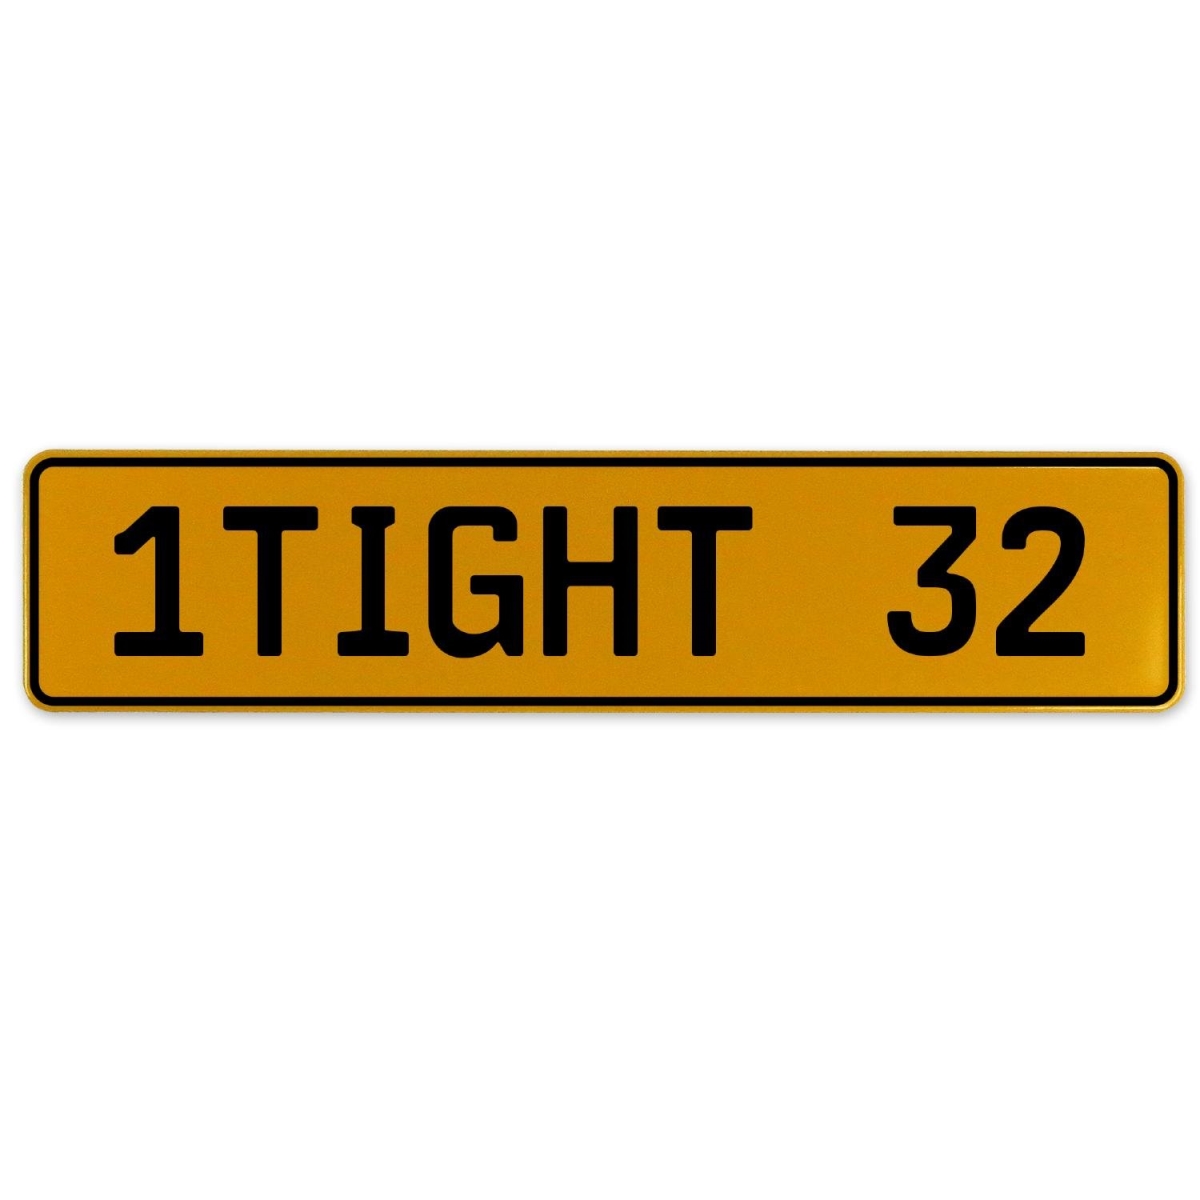 1tight 32 - Yellow Aluminum Street Sign Mancave Euro Plate Name Door Sign Wall